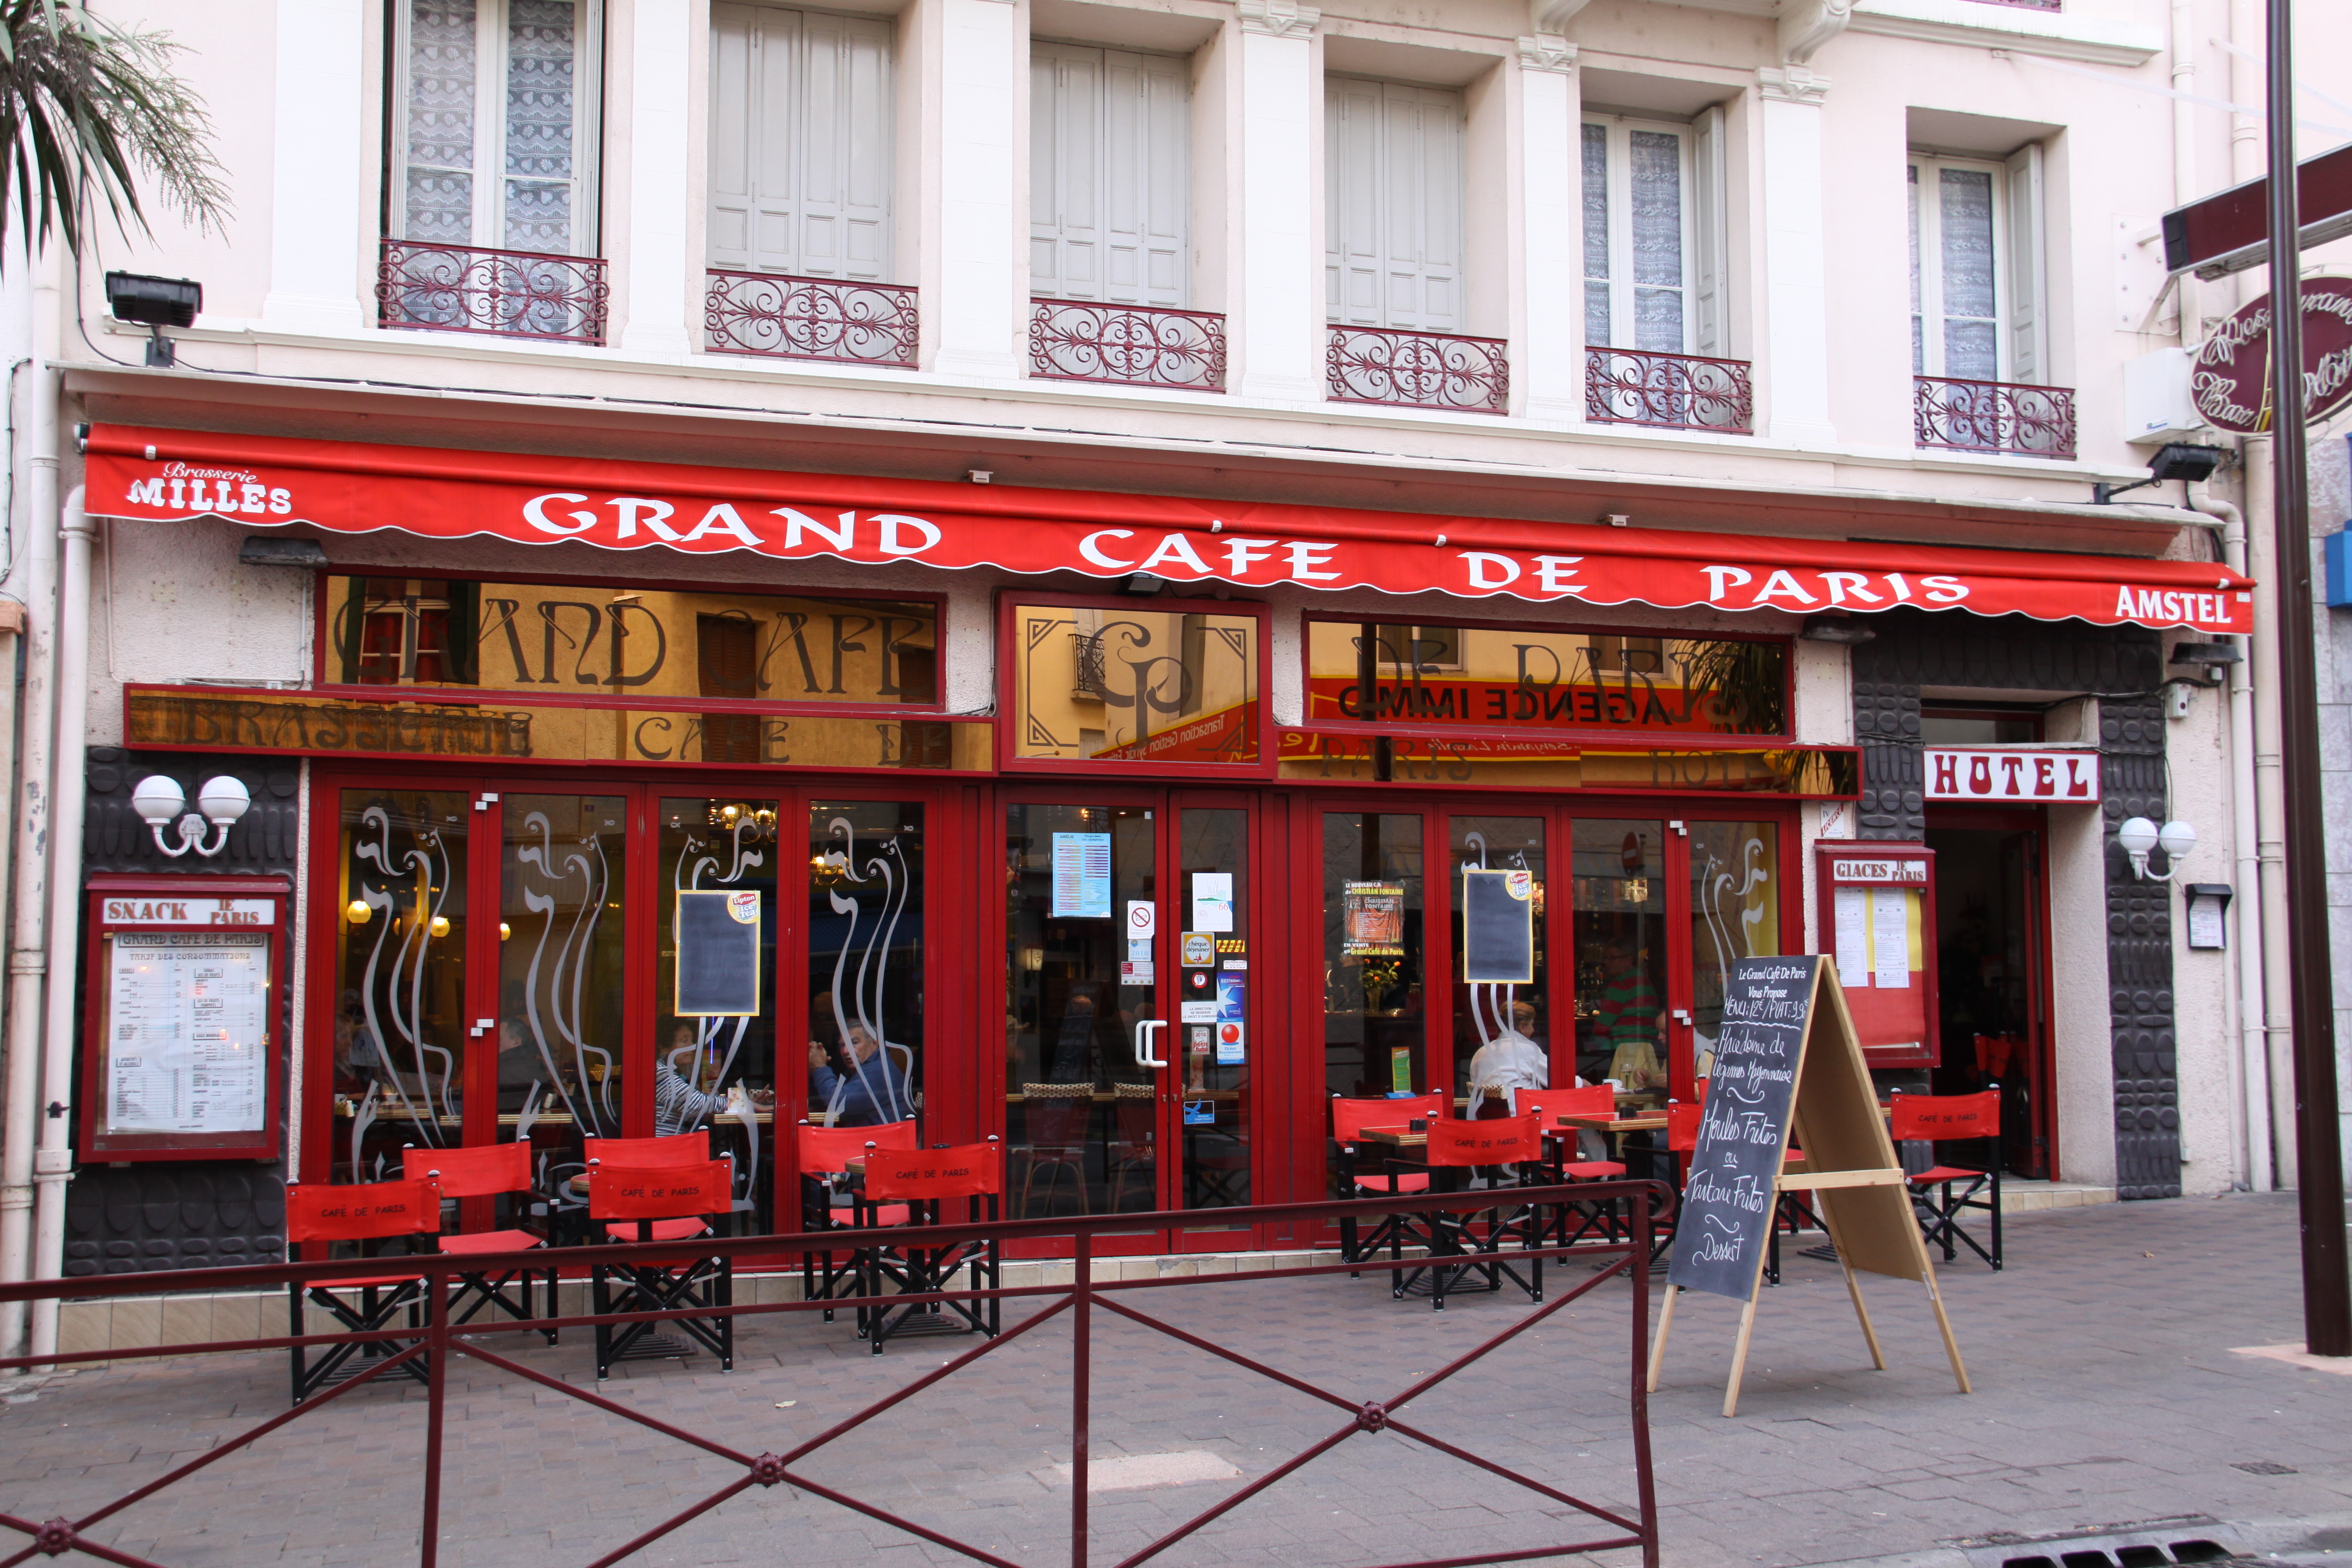 Кафе де париж. Кафе Амели в Париже. Гранд кафе Париж. Кафе Cafe de Paris.